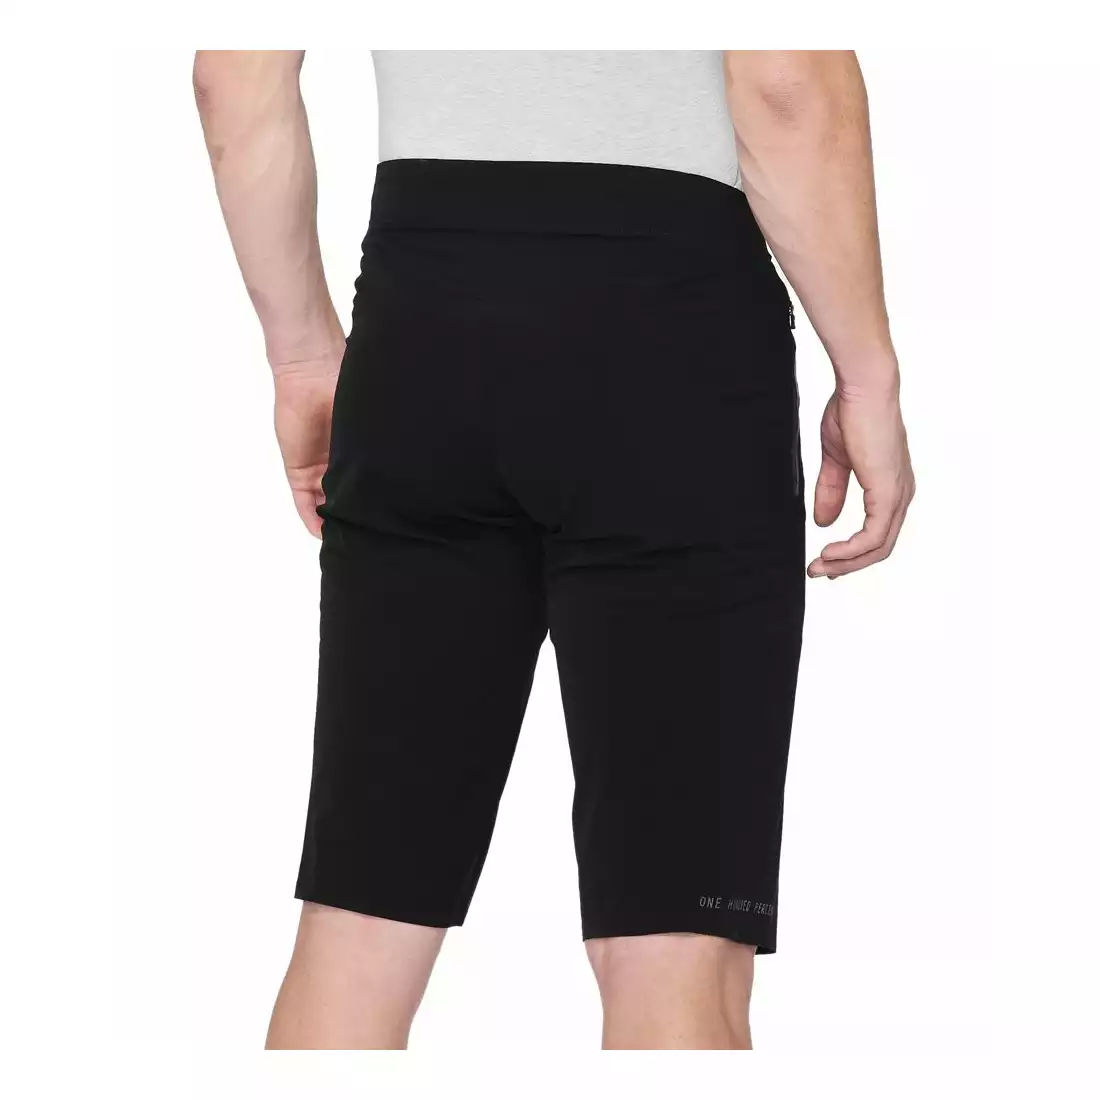 100% CELIUM Men's cycling shorts, black